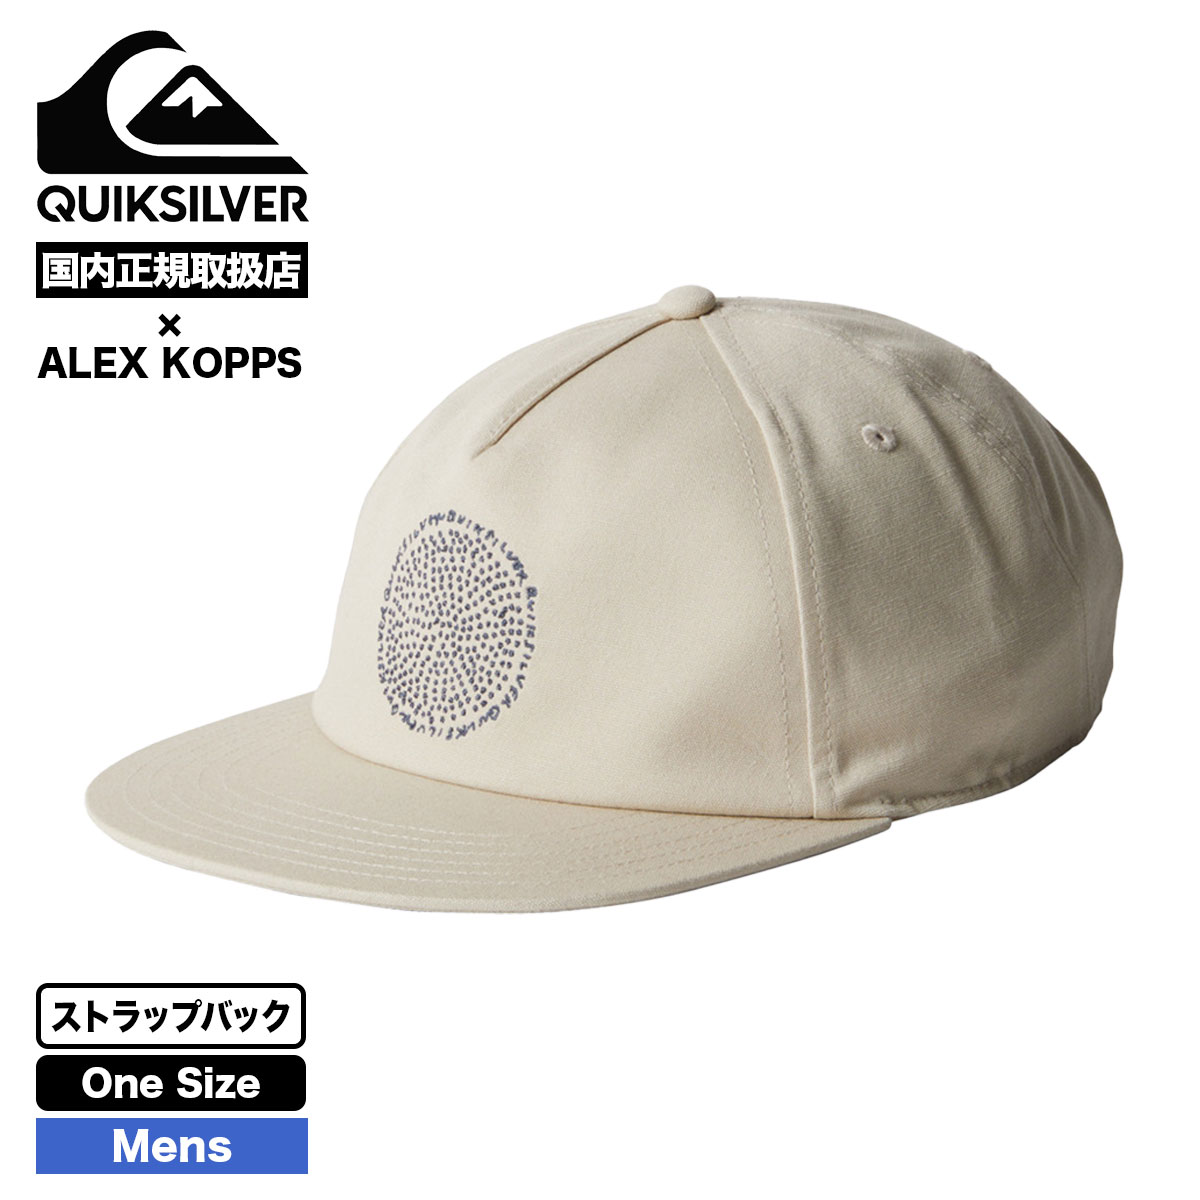 QUIKSILVER クイックシルバー キャップ 帽子 ALEX KOPPS CAP アレックス・コ...